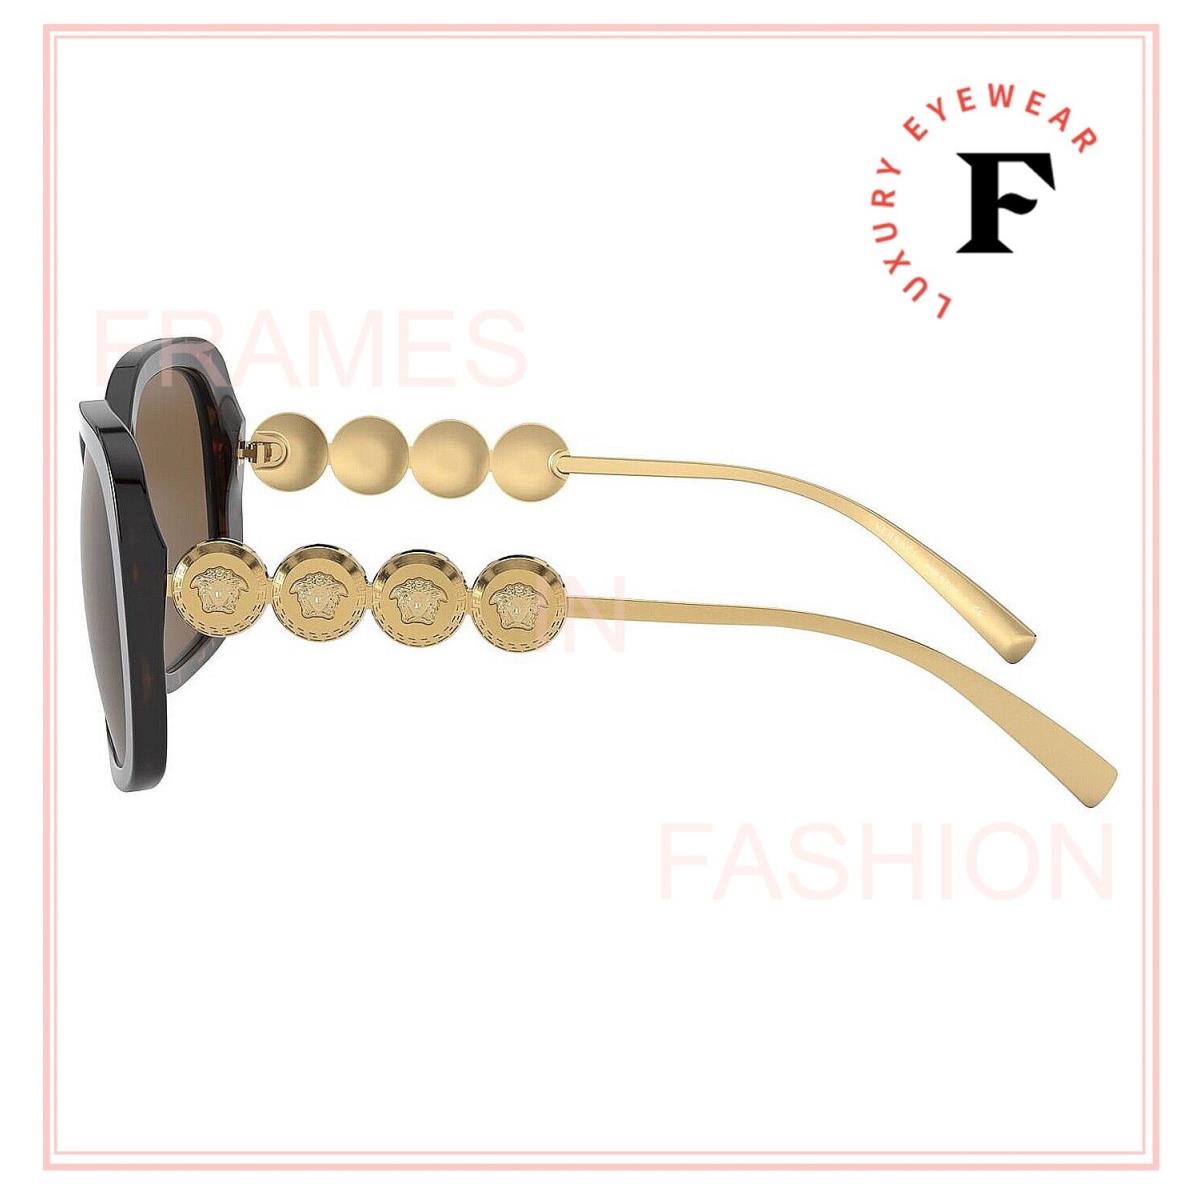 Versace sunglasses  - 1002/13 , Gold Frame, Brown Lens